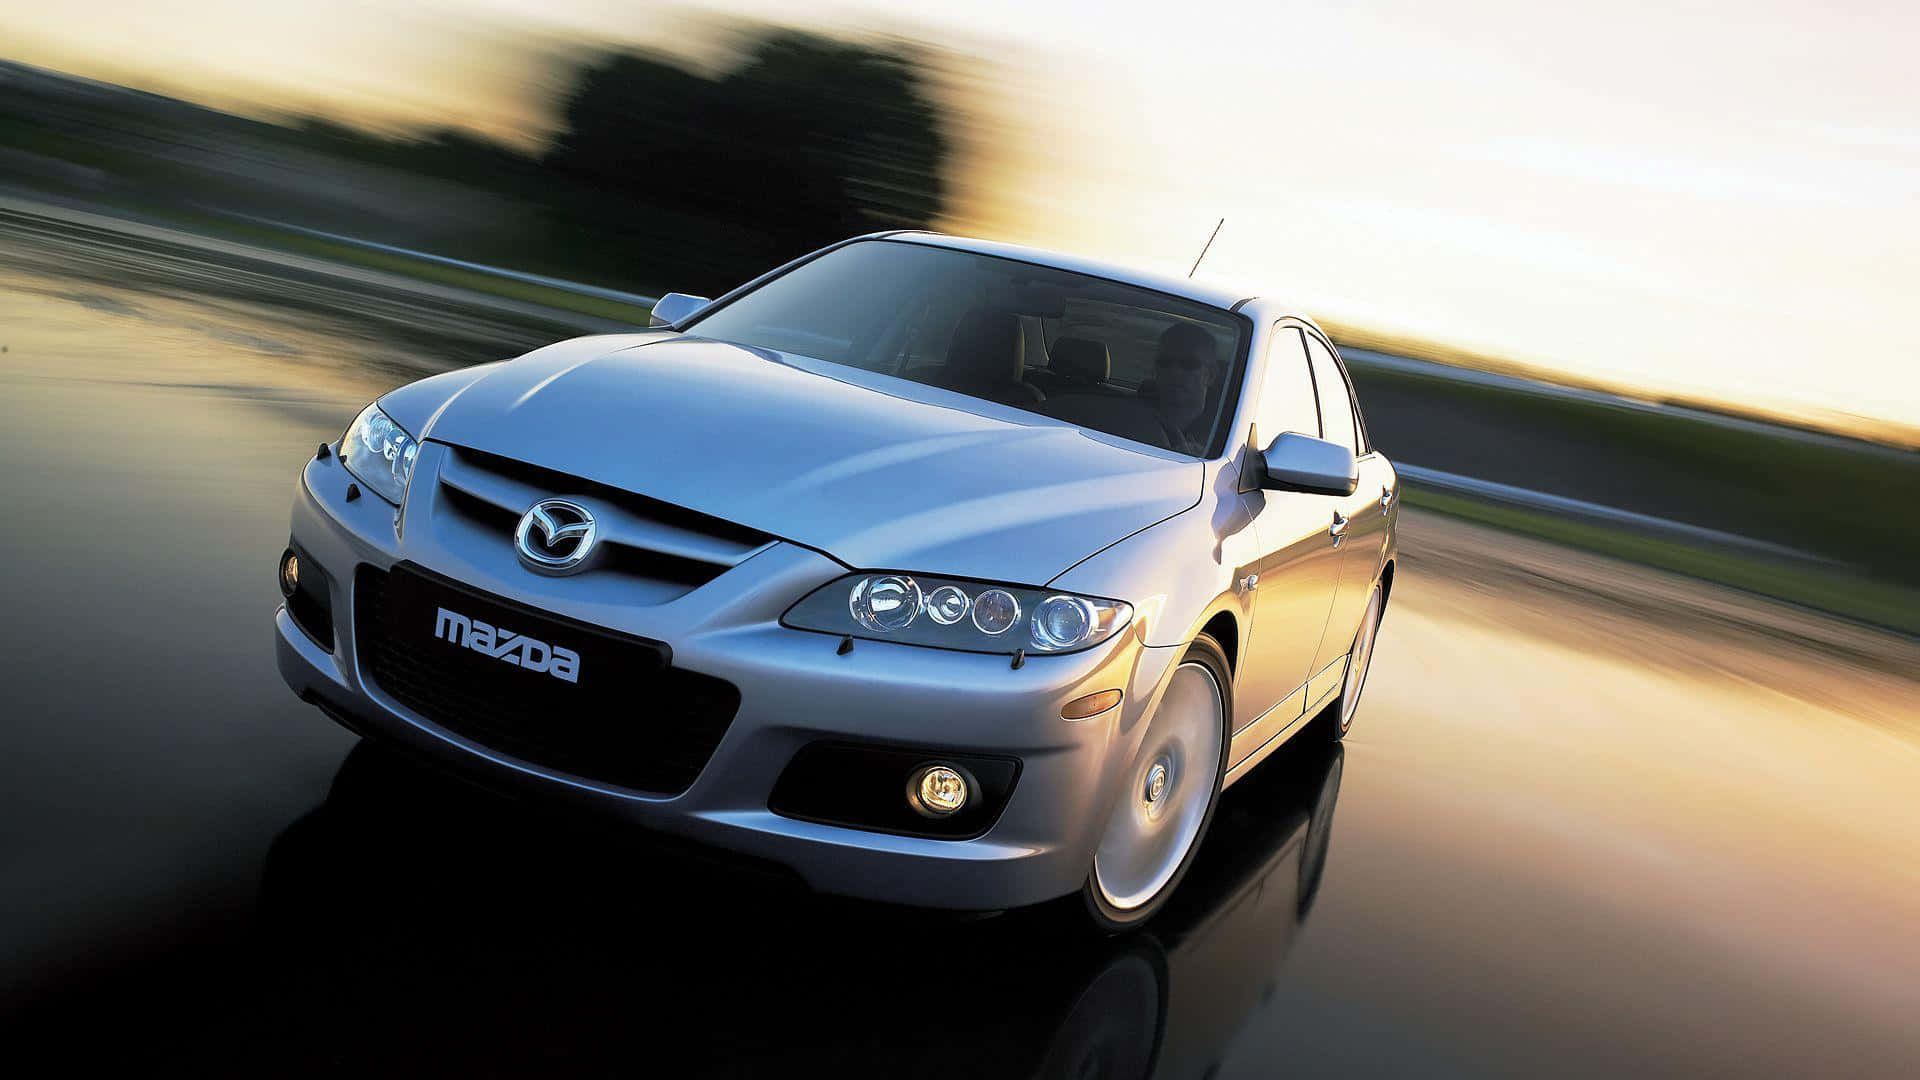 Captivating Mazda 6 in Action Wallpaper